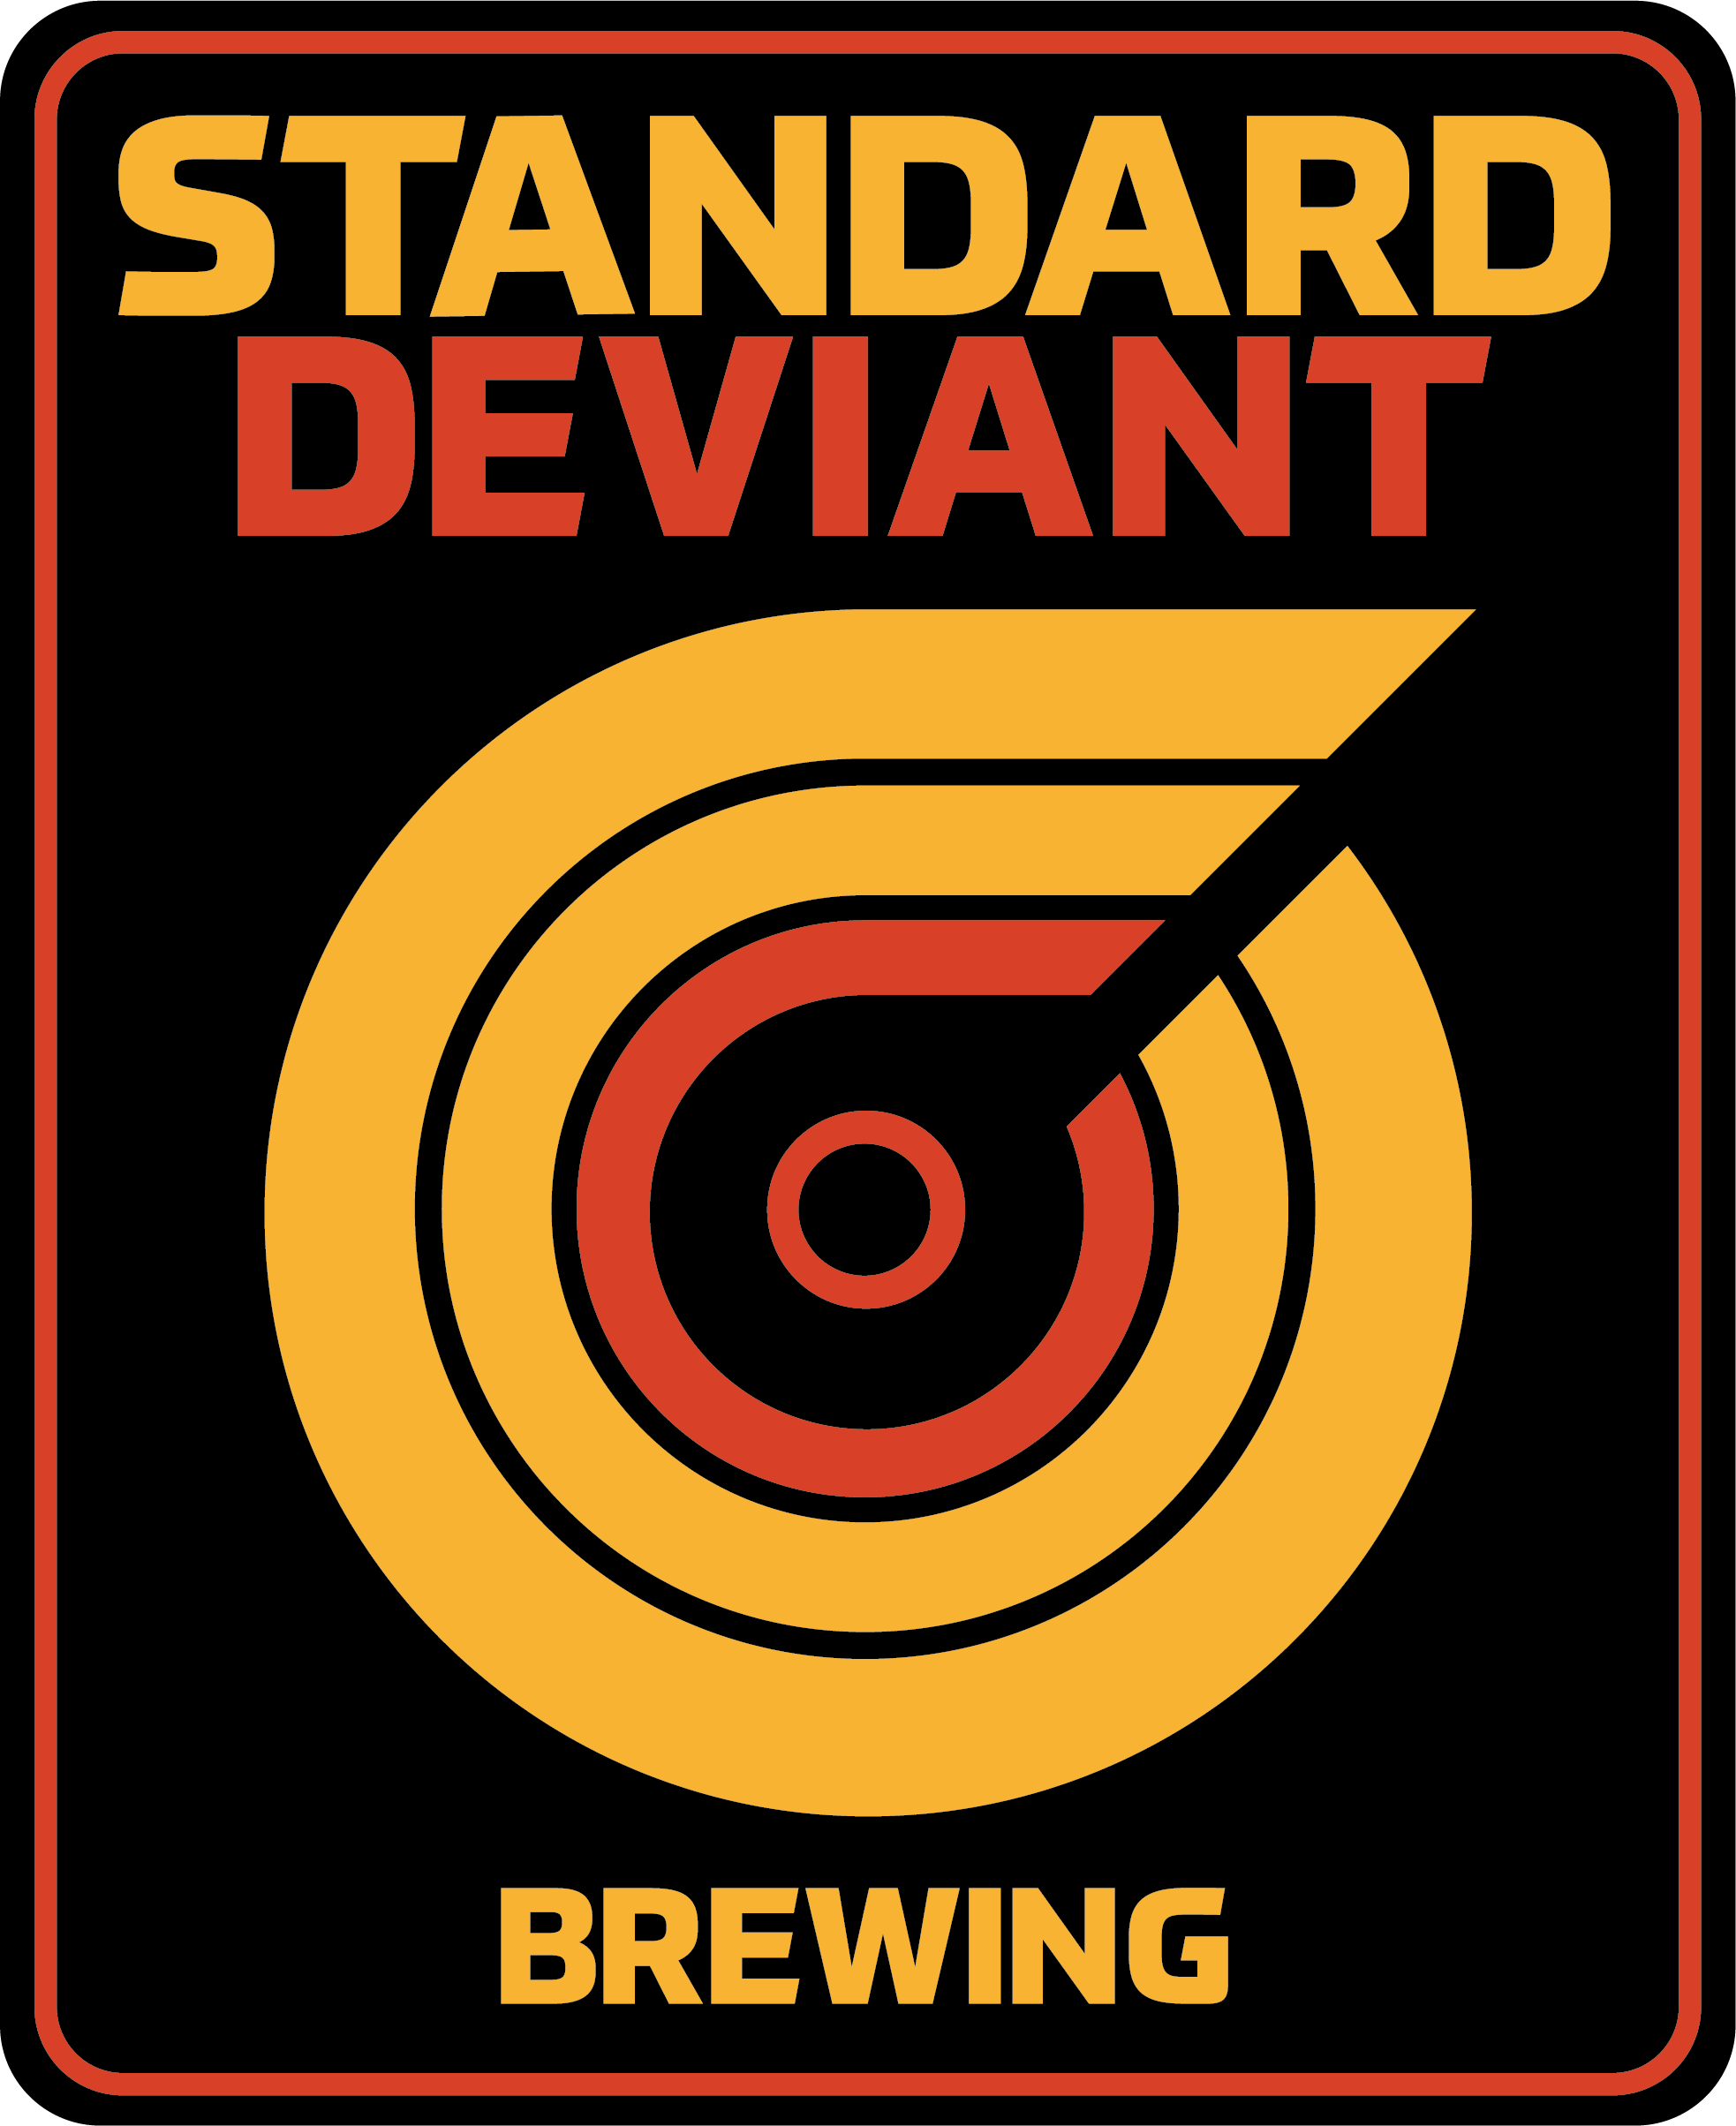 Standard Deviant Brewing